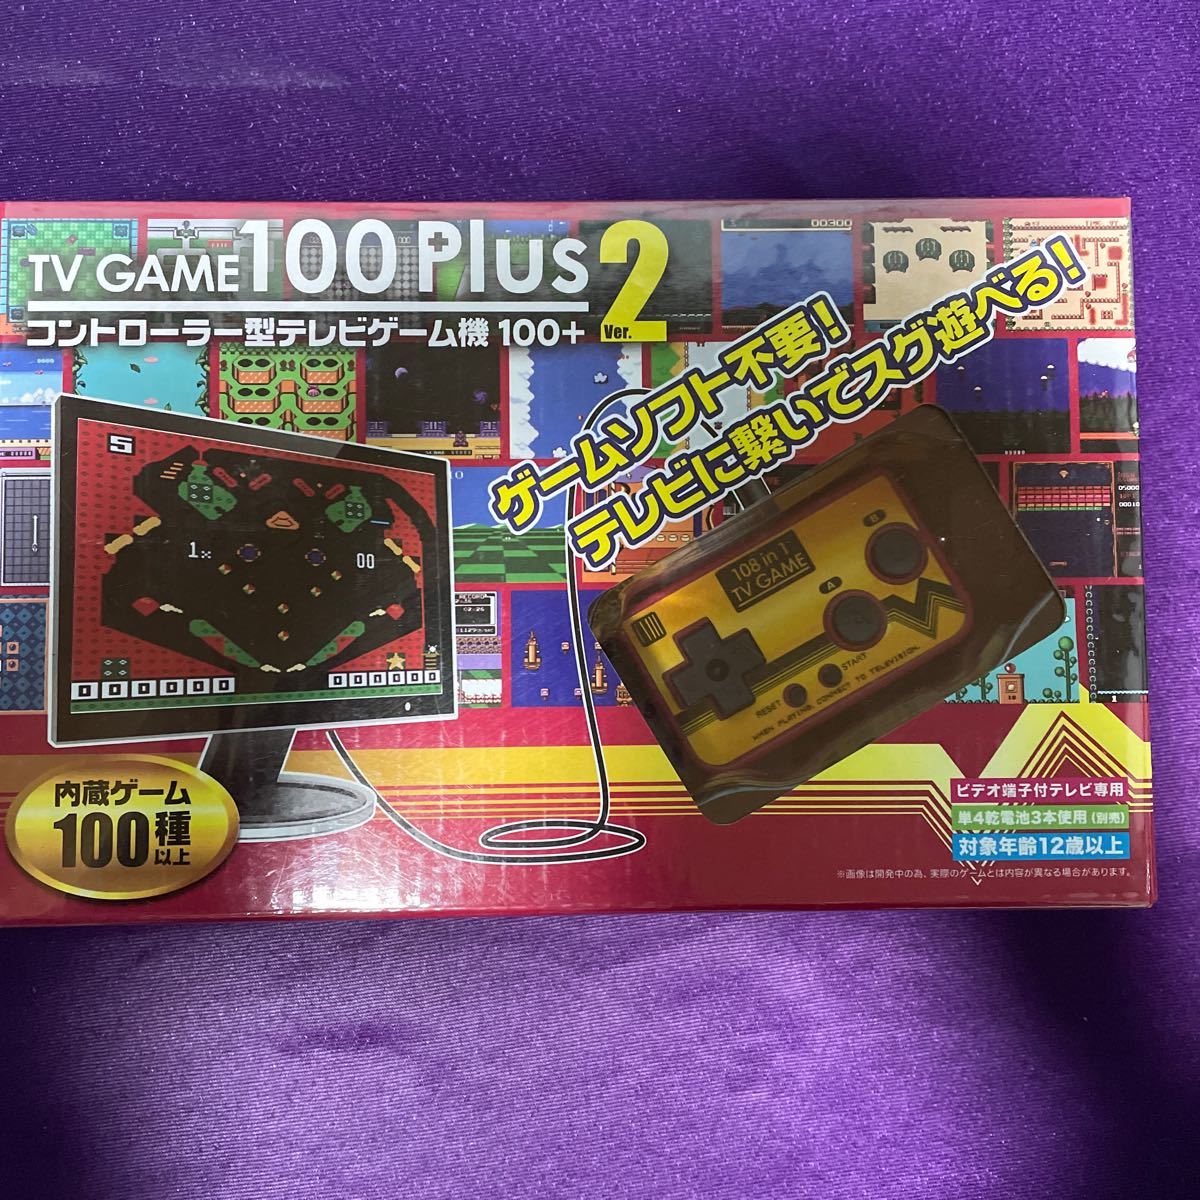 TV GAME 100 PLUS Ver.2 コントローラー型テレビゲーム機(レッド)/未開封品/レトロゲーム/ファミコン風/プライズ_画像1